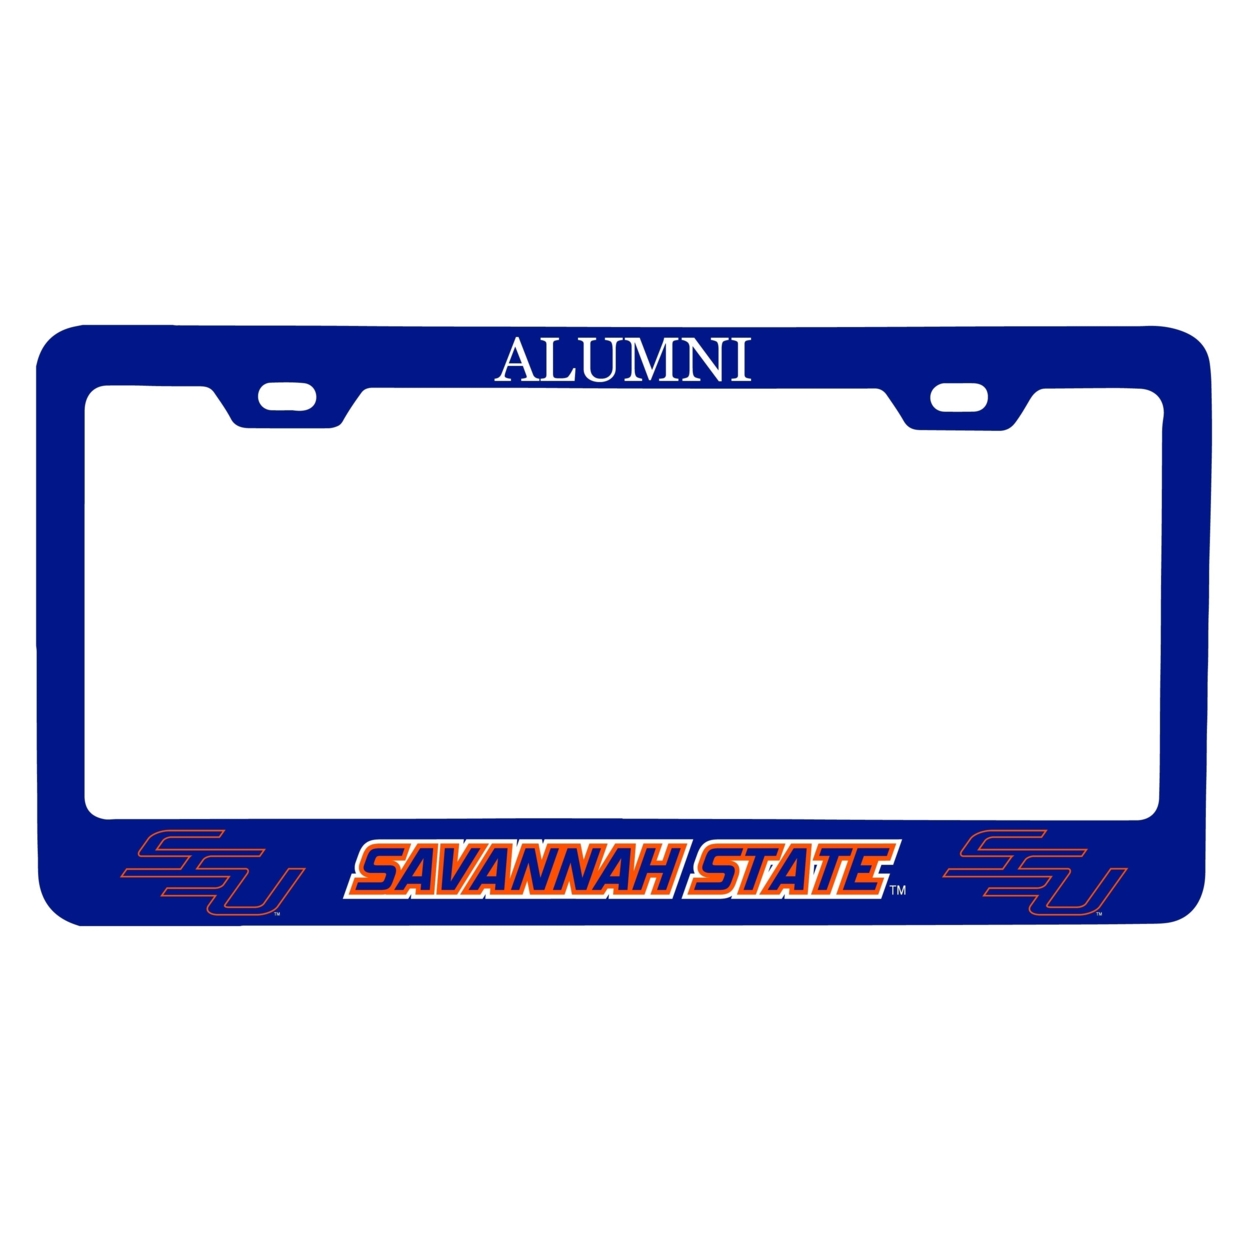 Savannah State University Alumni License Plate Frame